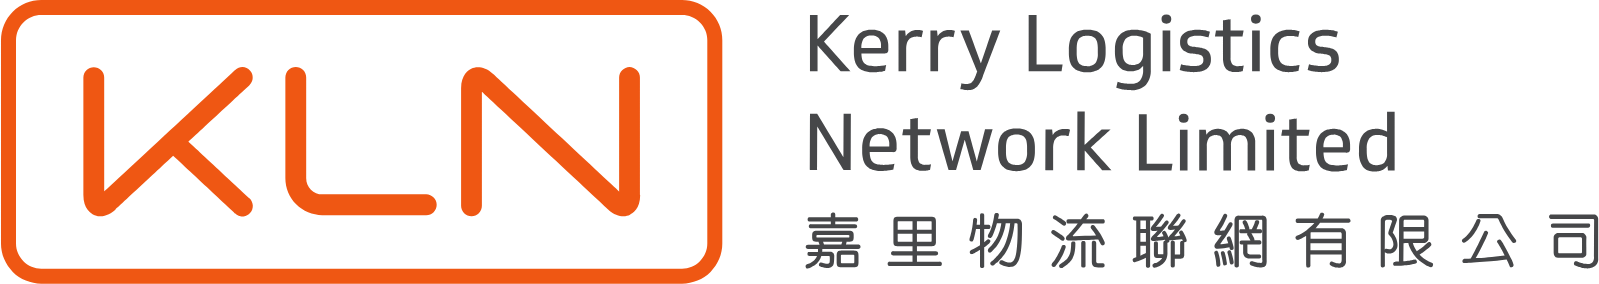 Kerry Logistics Network logo large (transparent PNG)